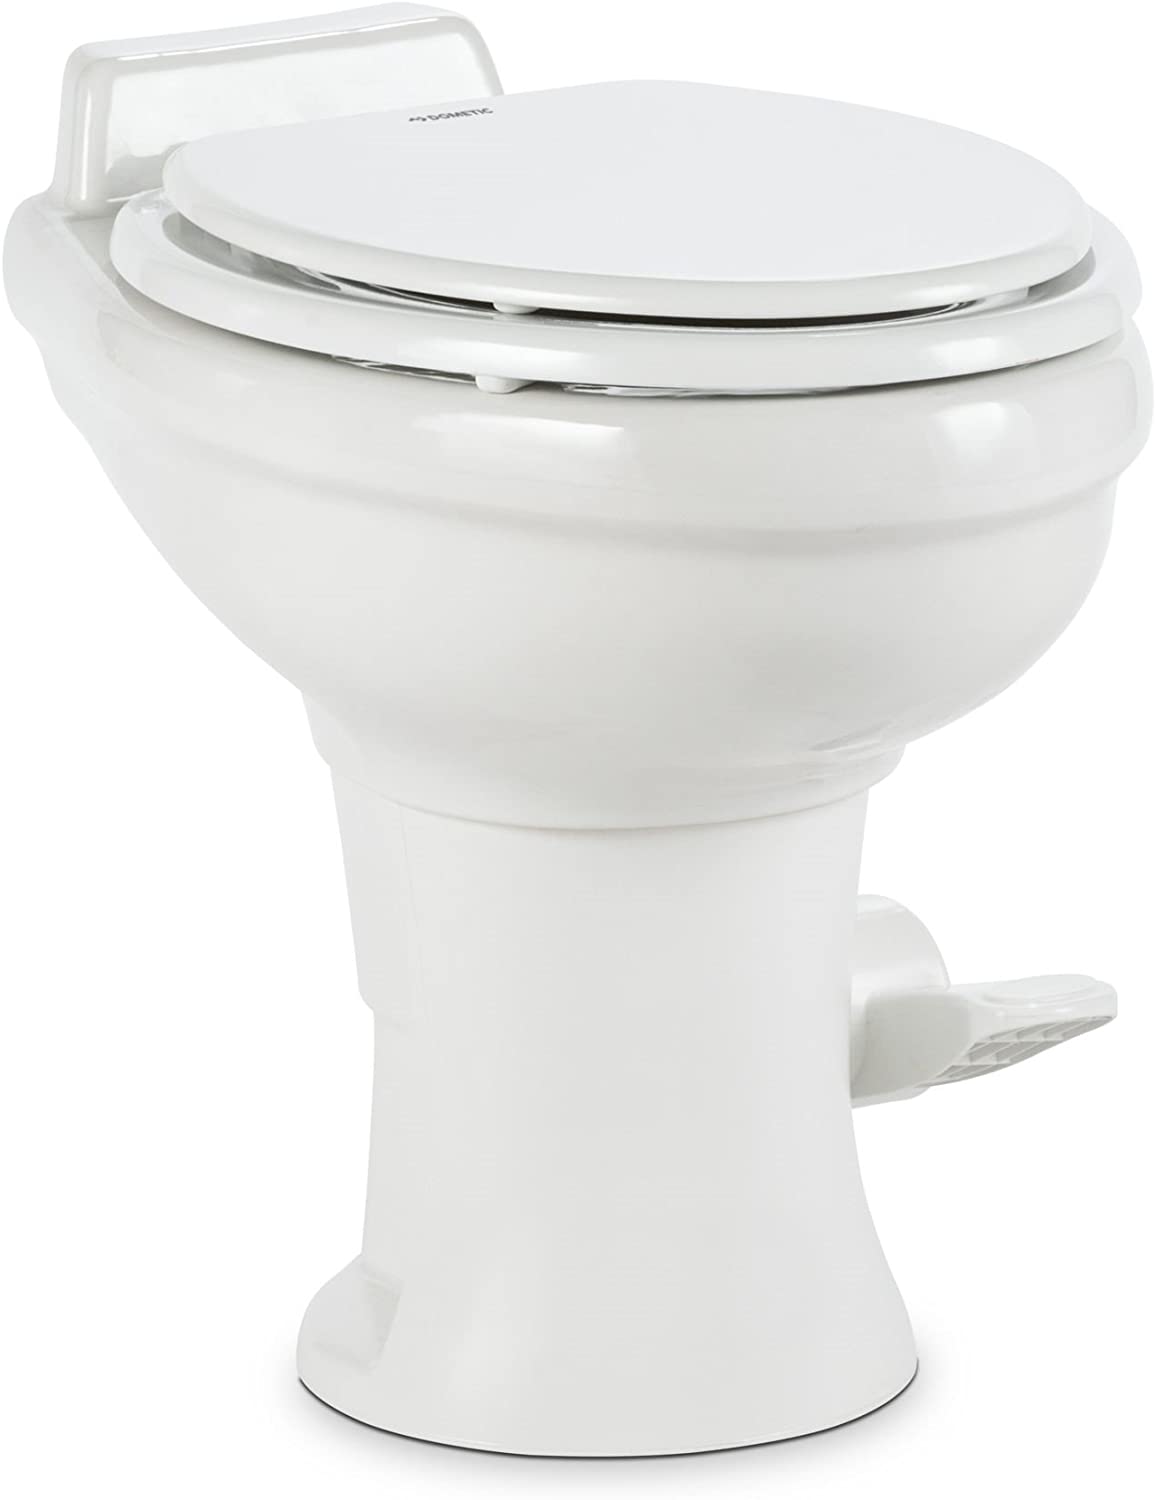 Dometic 320 Series Standard Height Toilet – The Best Standard RV Toilet